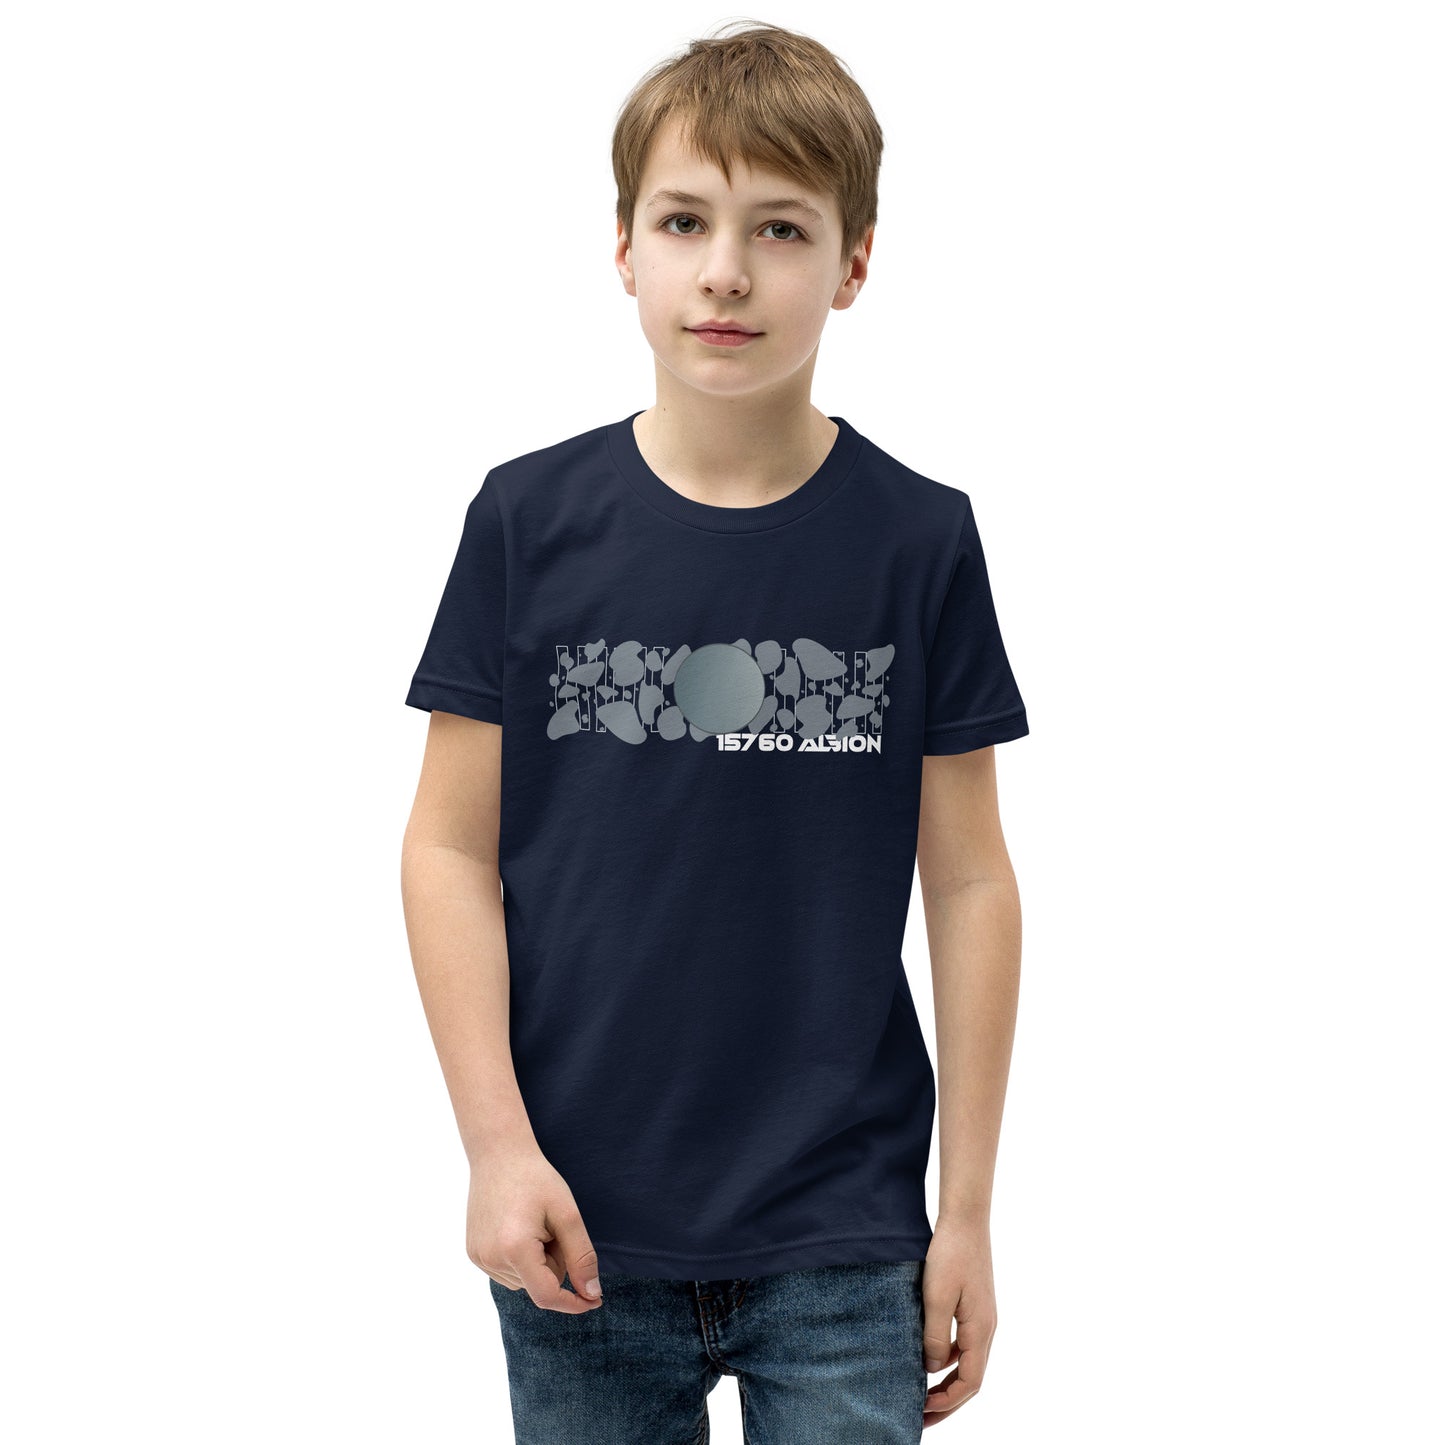 15760 Albion dark Youth Short Sleeve T-Shirt